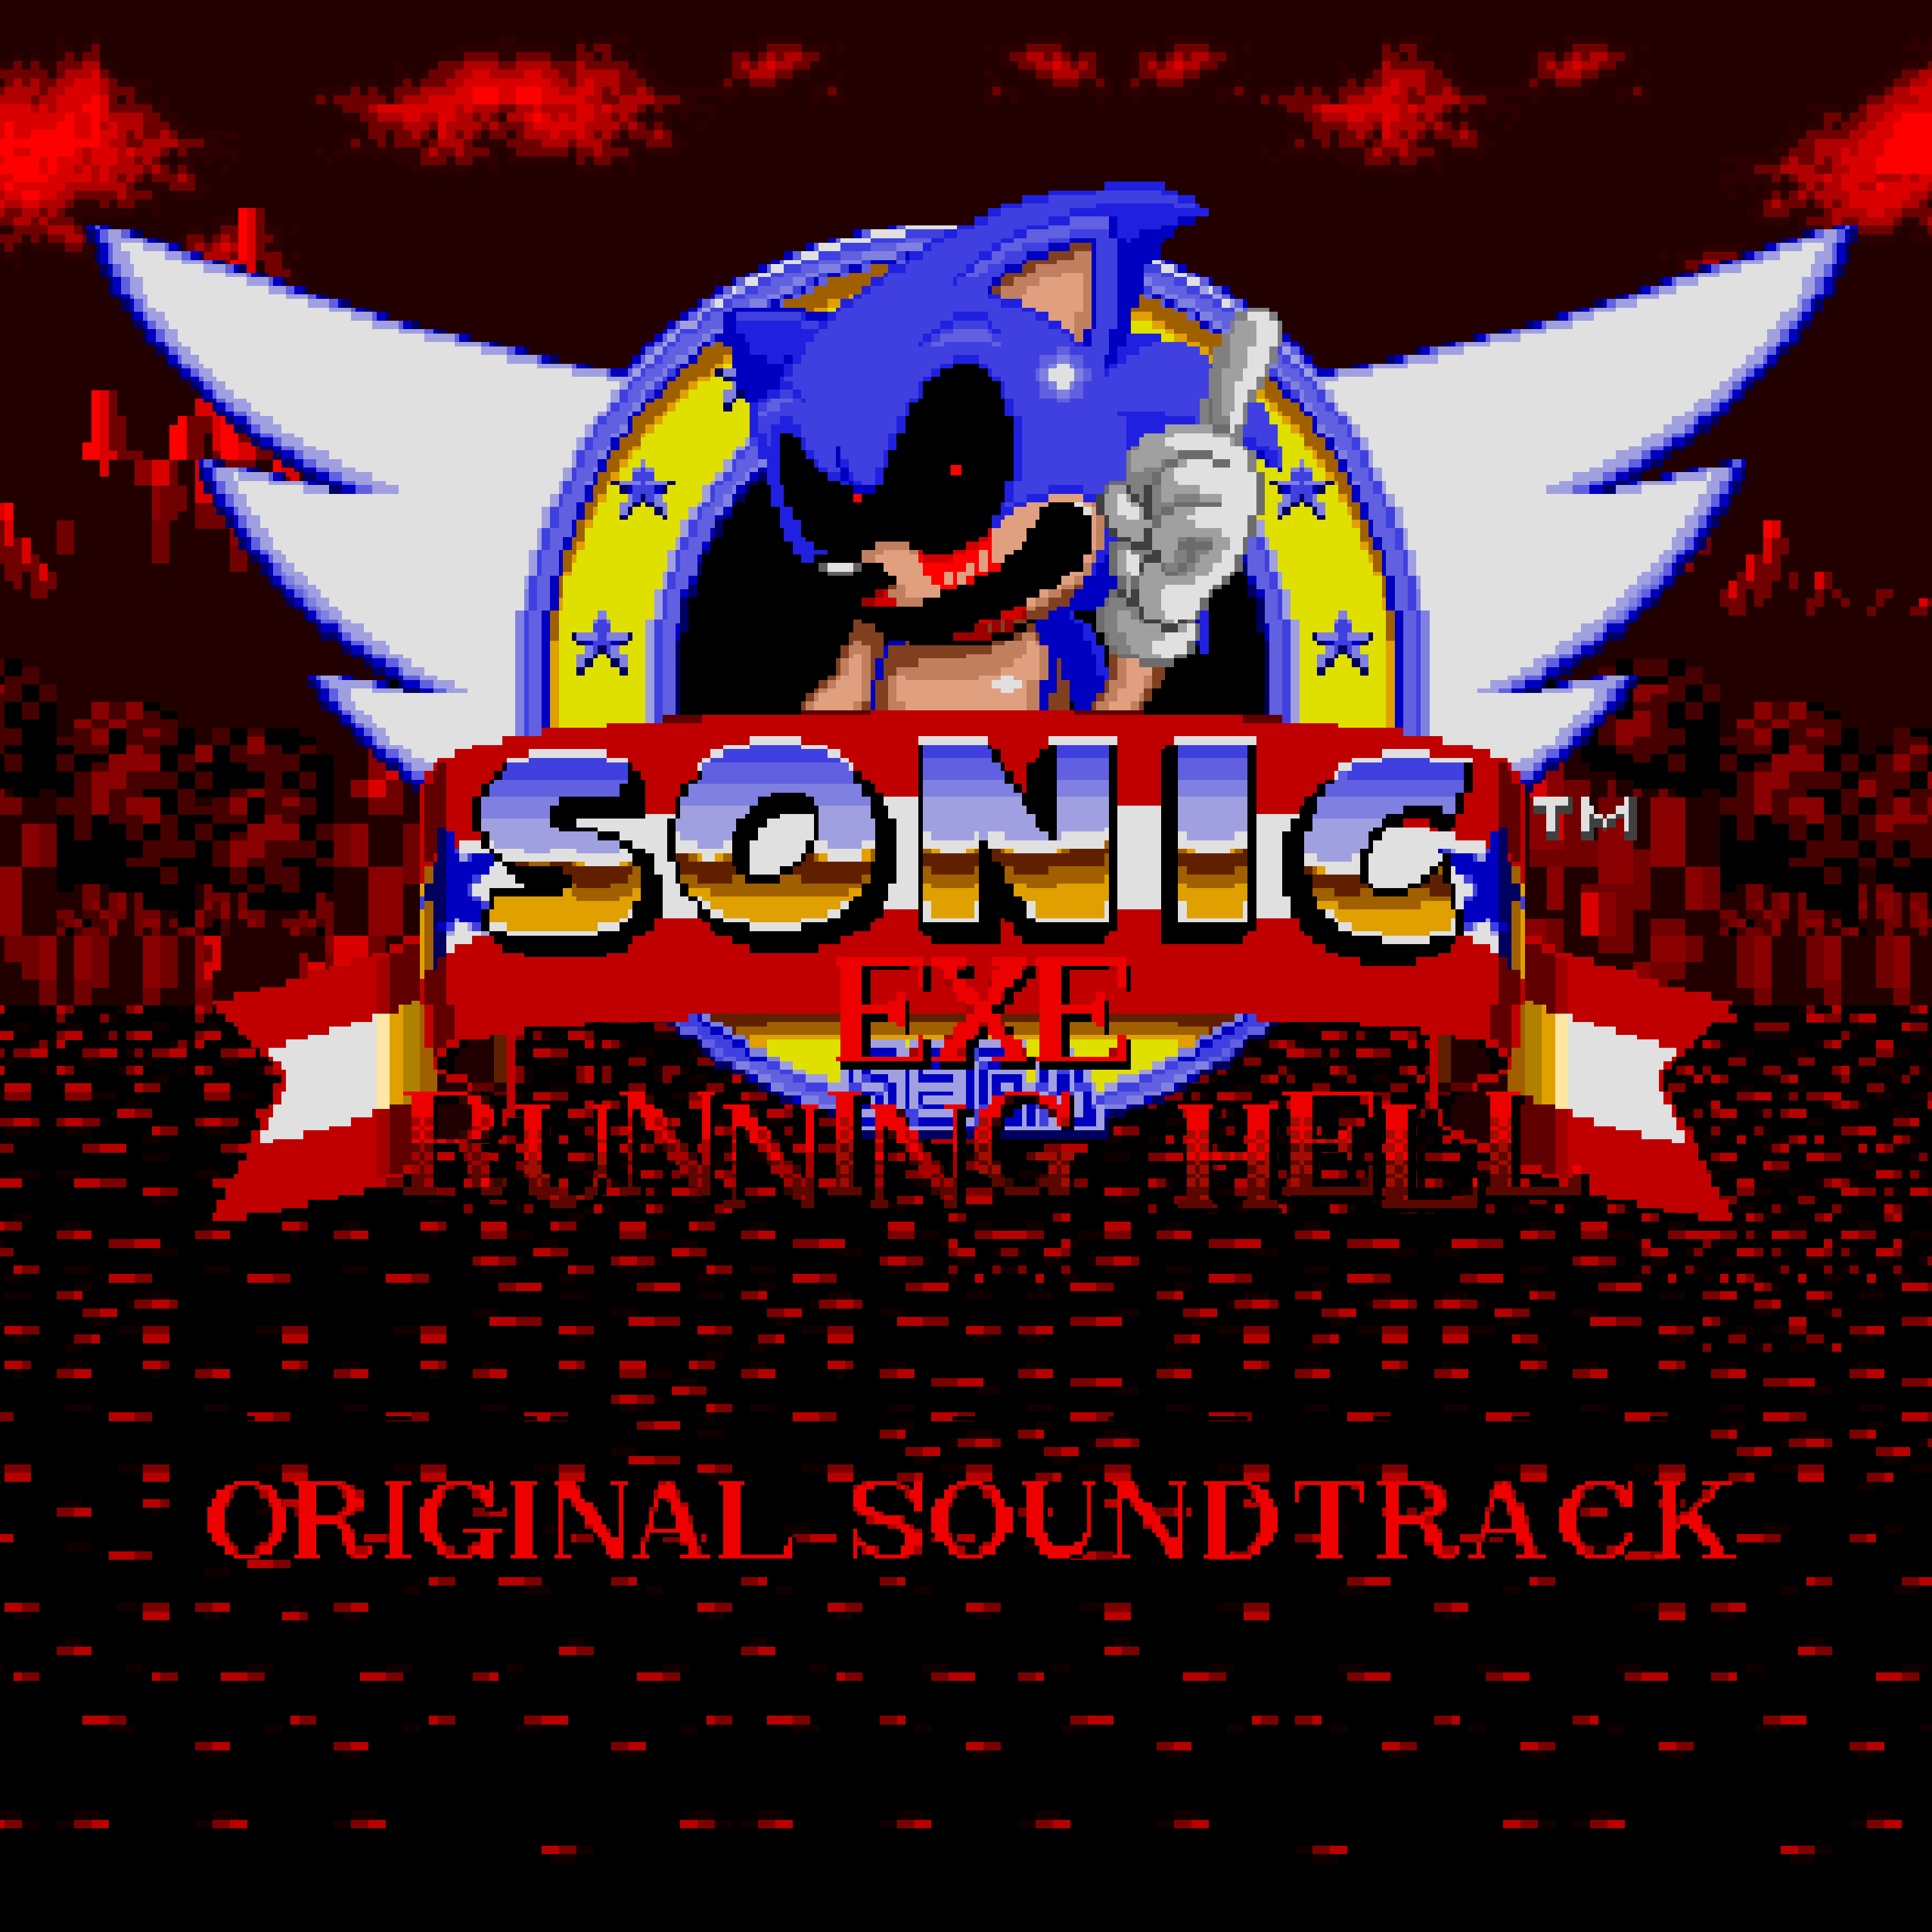 Sonic.Exe2 Rap Songs Download - Free Online Songs @ JioSaavn